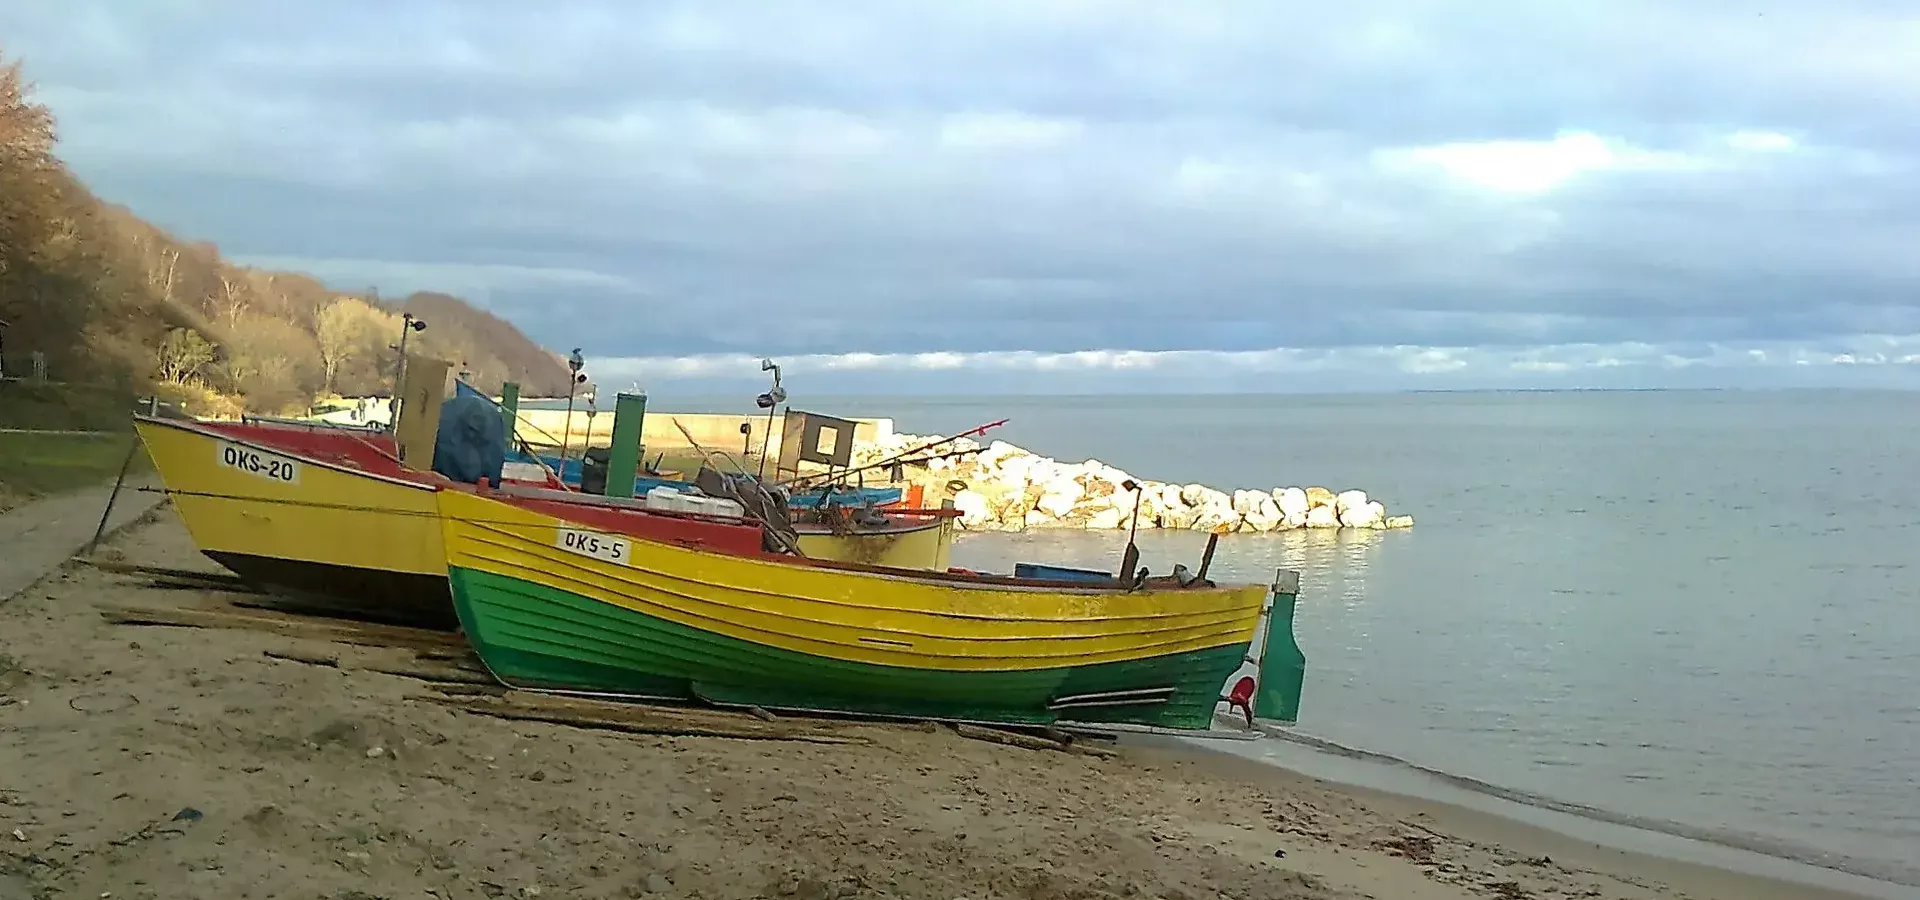 Oksywie fishing harbor